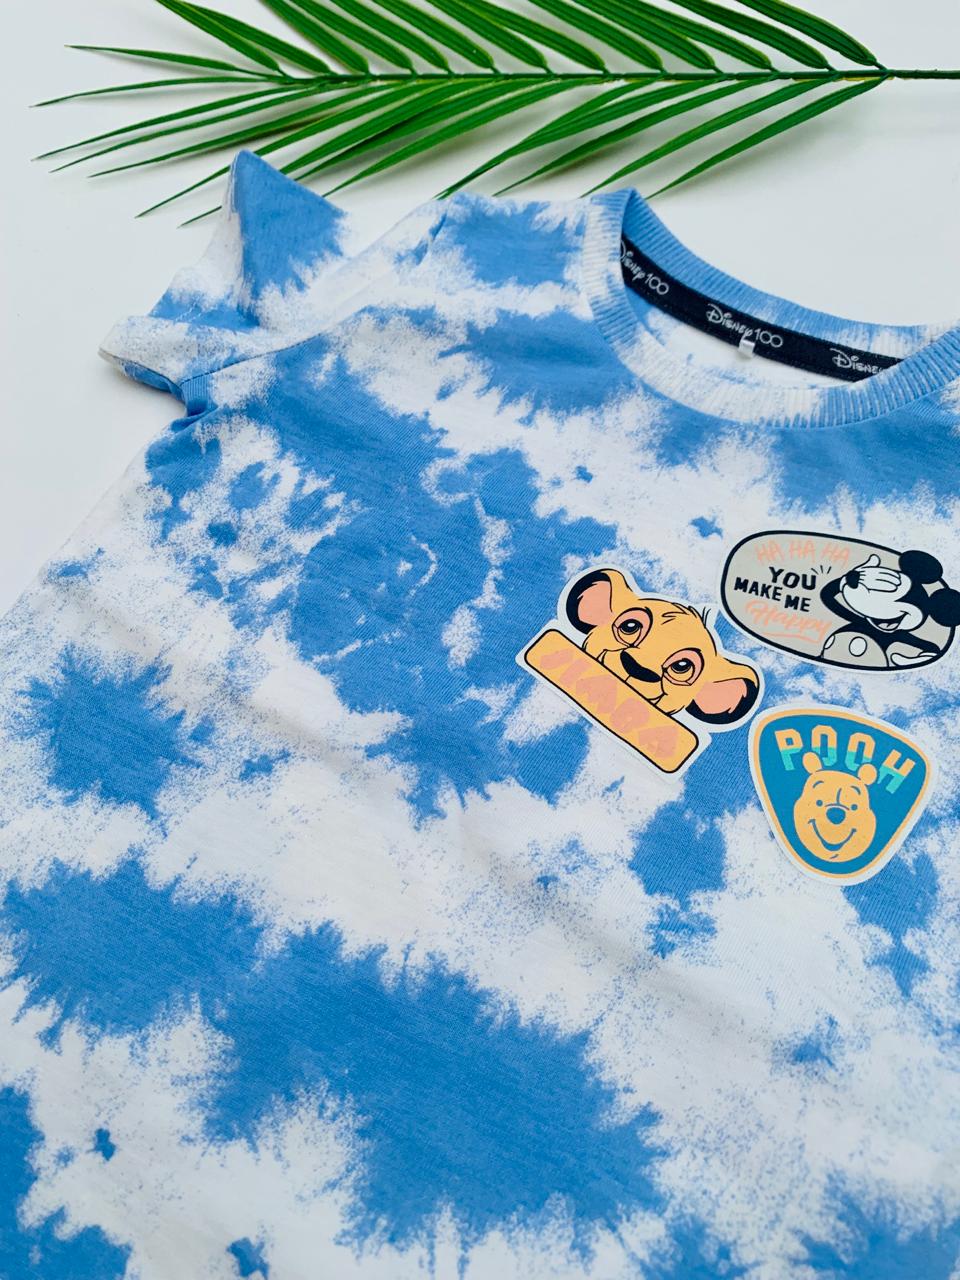 George Tie & Dye Pooh Shirt & Shorts Set